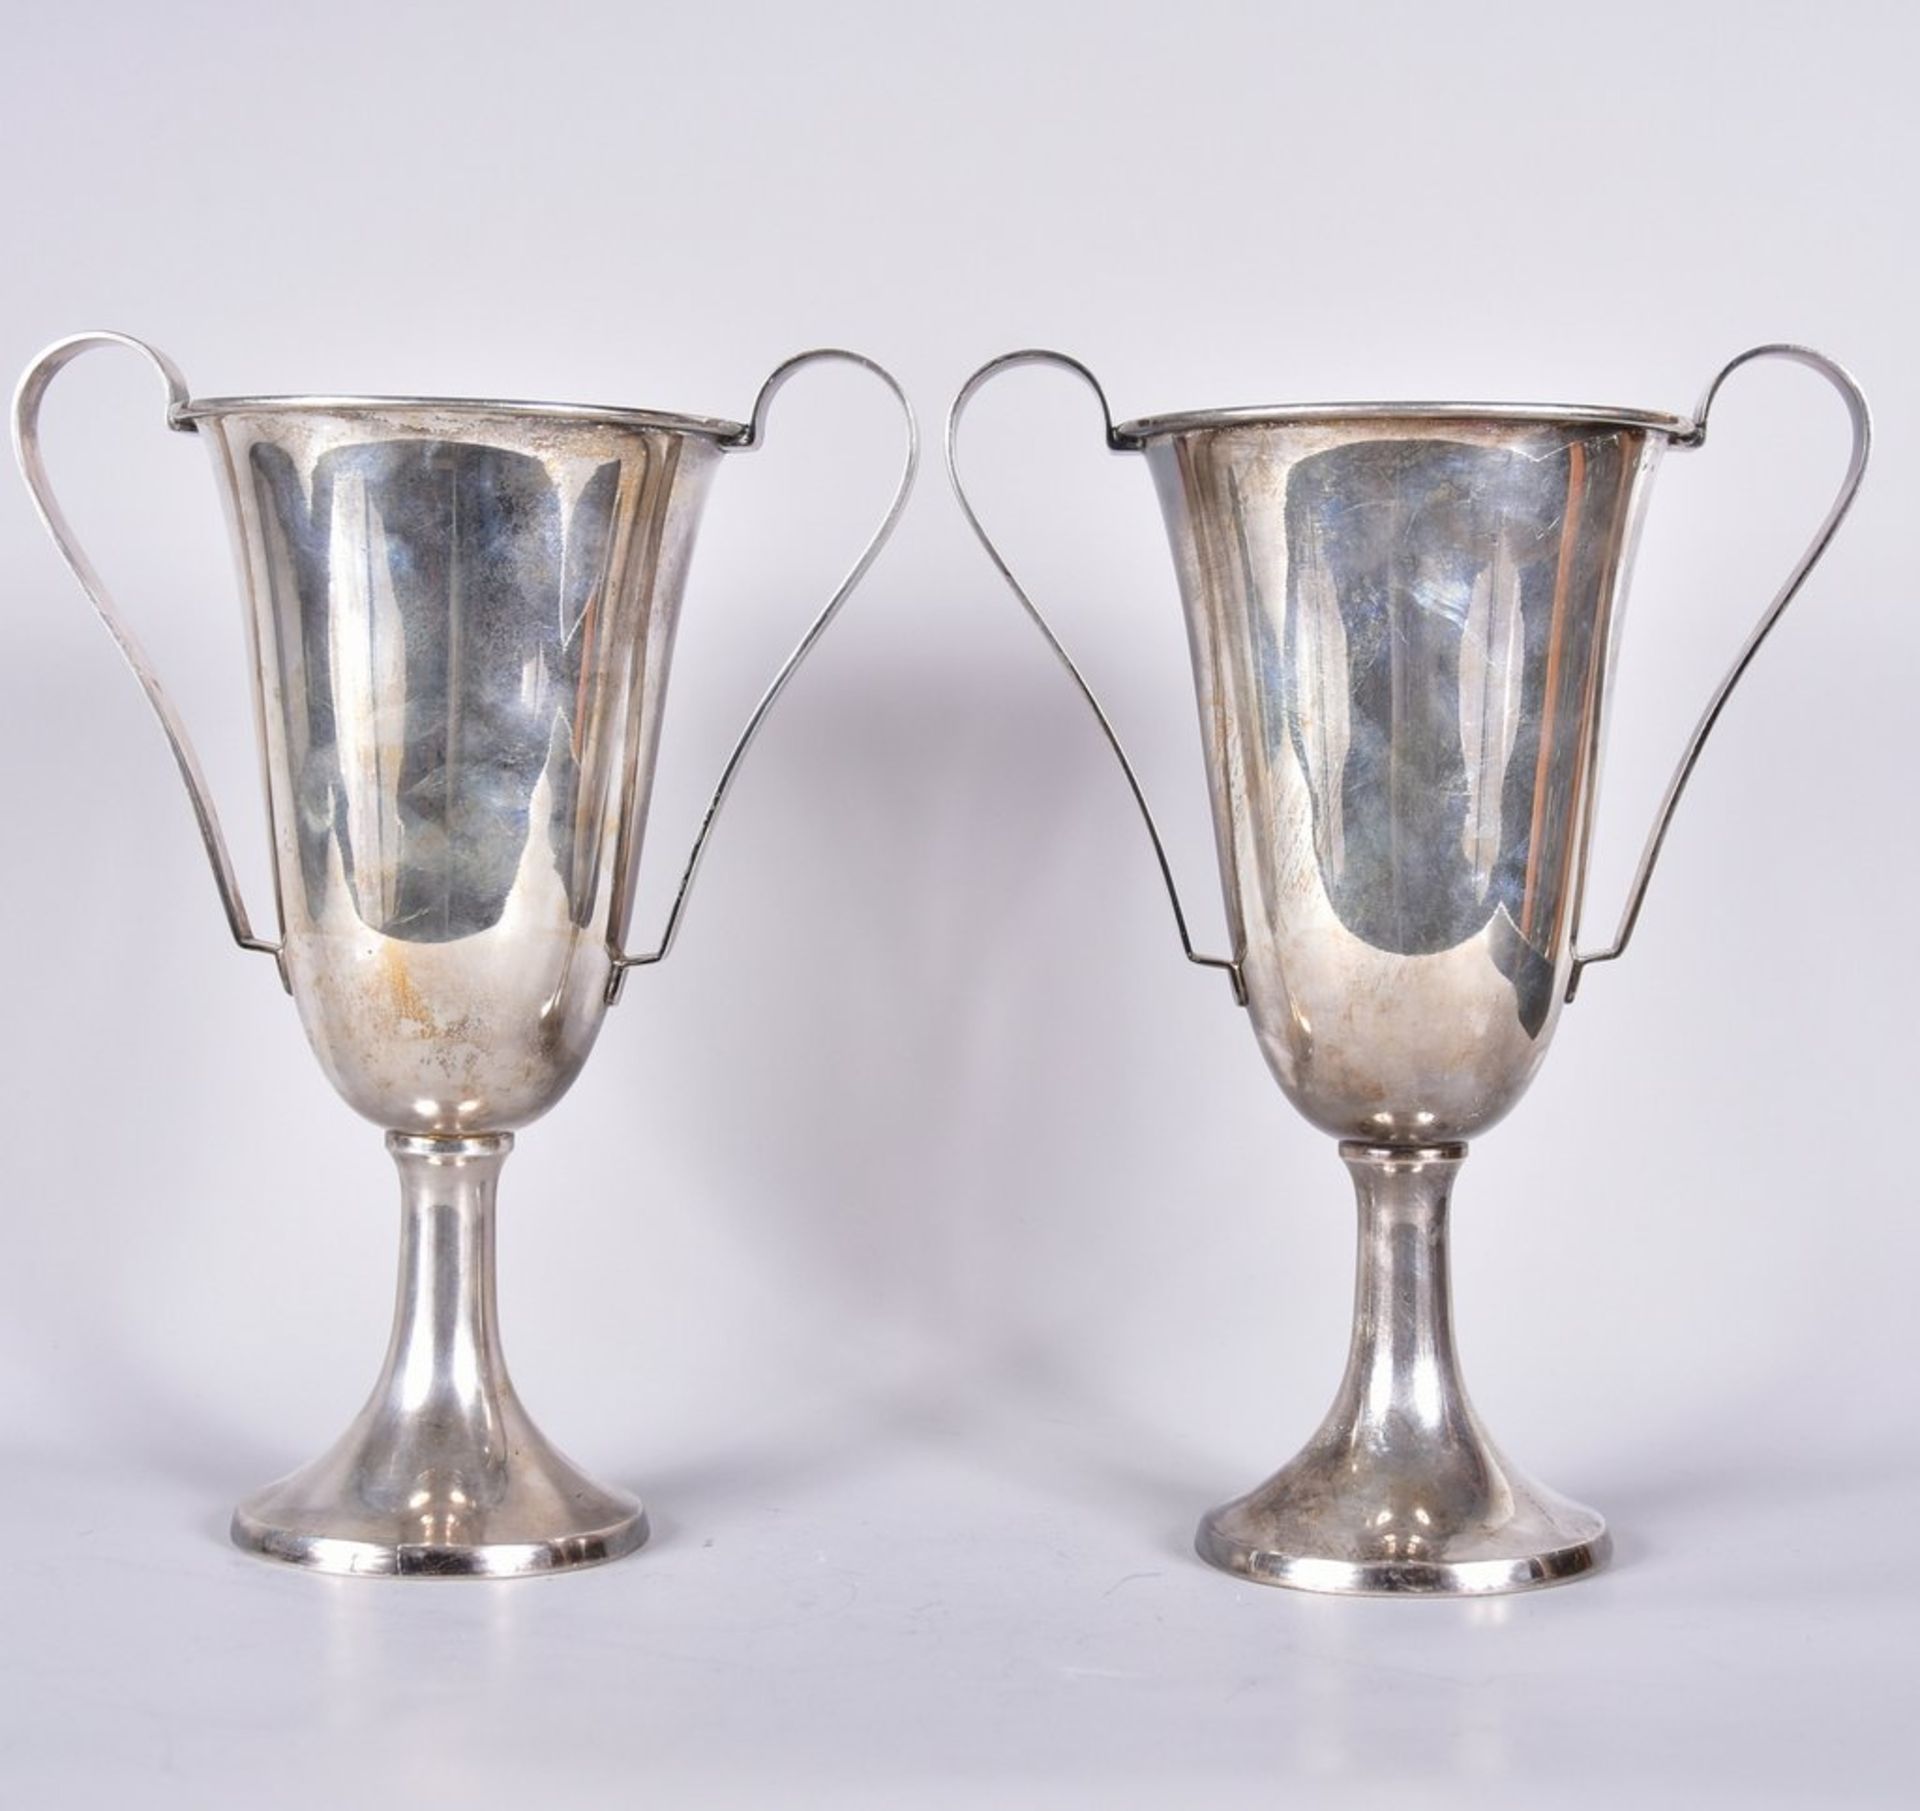 Paar große Amphoren-Pokale, Silber punziert 800 Tschechoslowakei 1929-1940, innen vergoldet, sehr